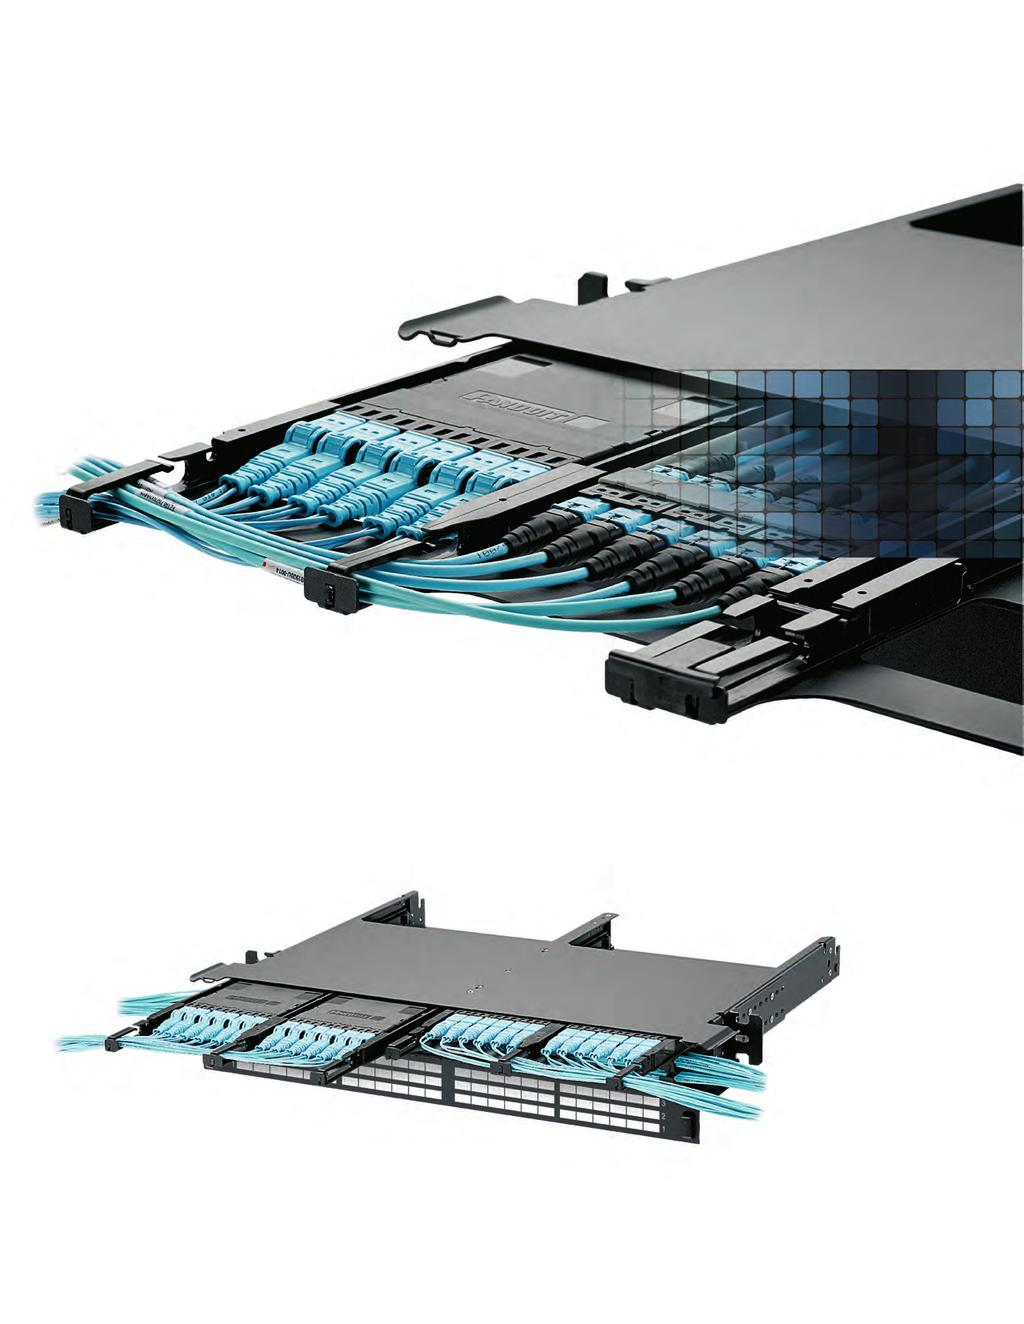 The split-tray design helps eliminate